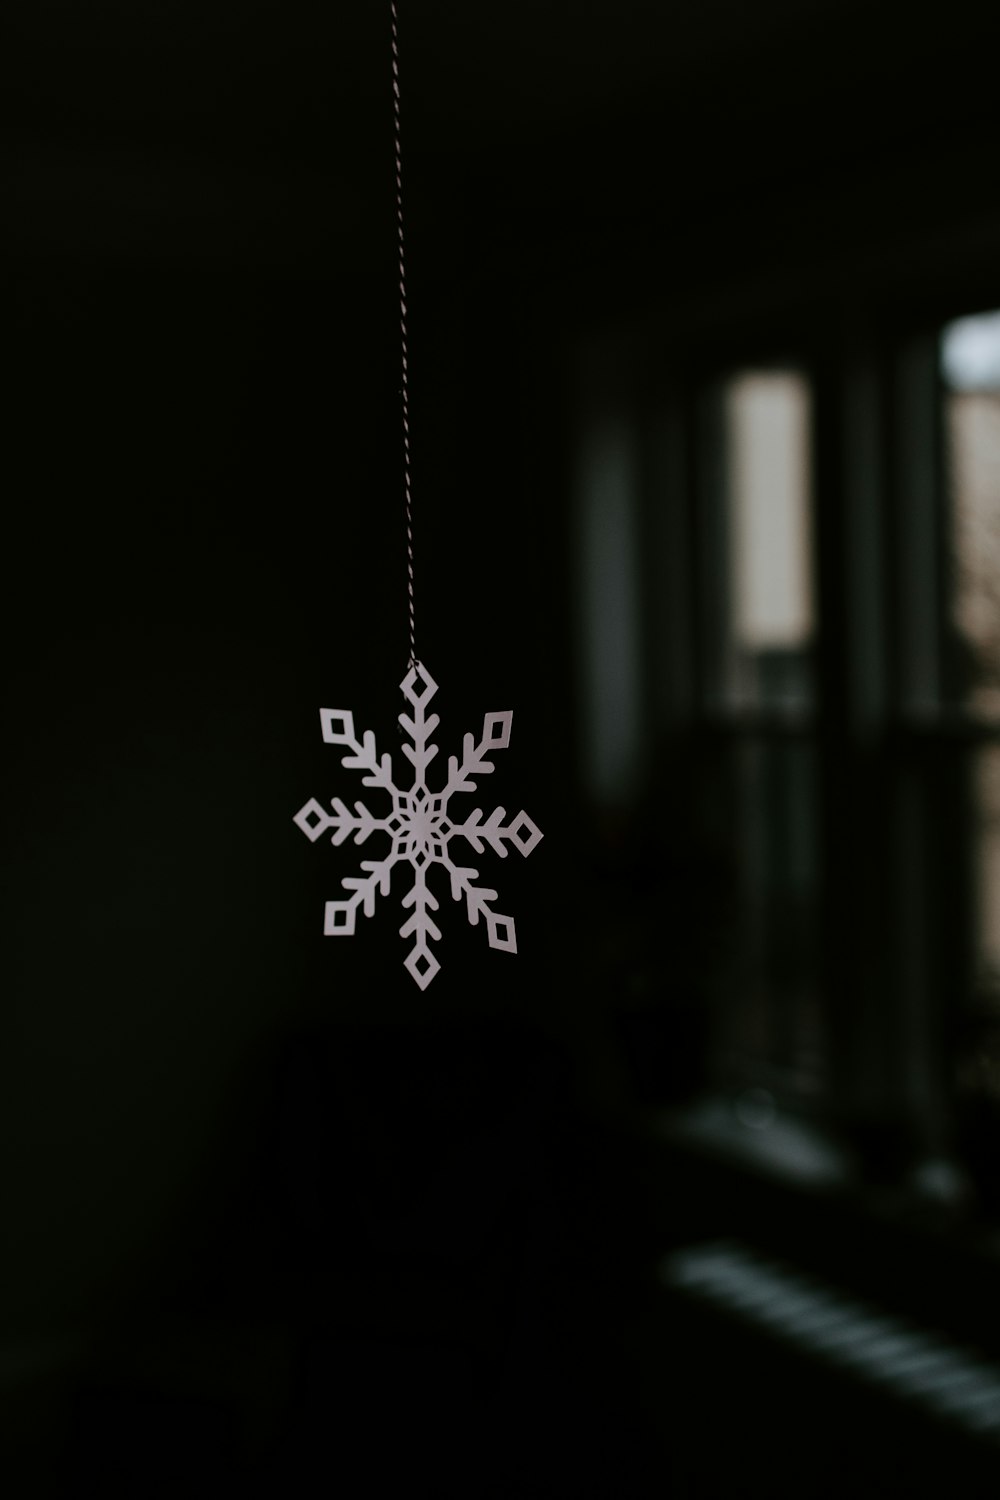 silver star pendant necklace in dark room